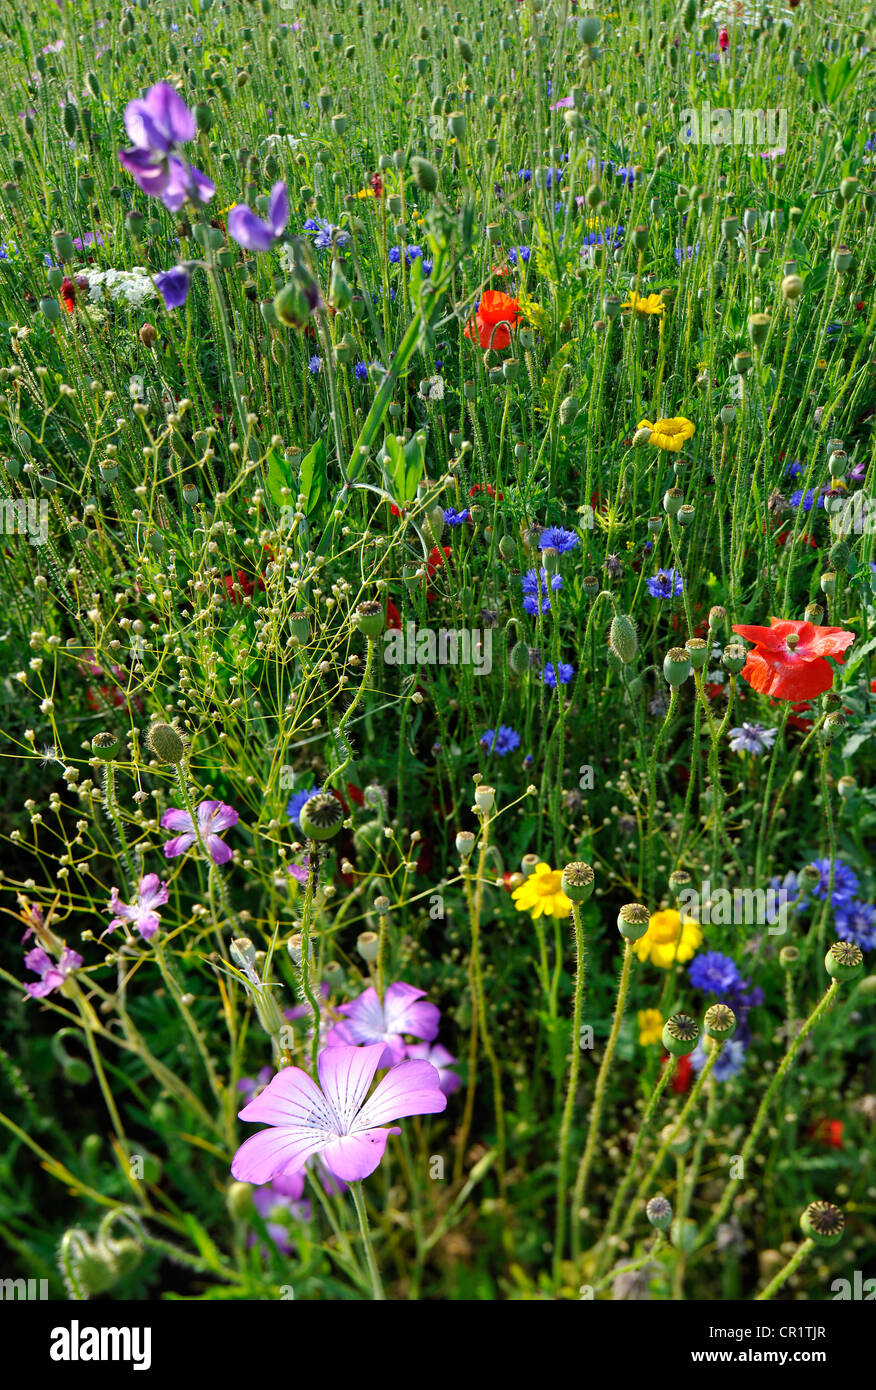 Summer meadow, Cornflower (Centaurea cyanus), Yarrow (Achillea), Mallow (Malva), Yellow Daisies (Leucanthemum) Stock Photo